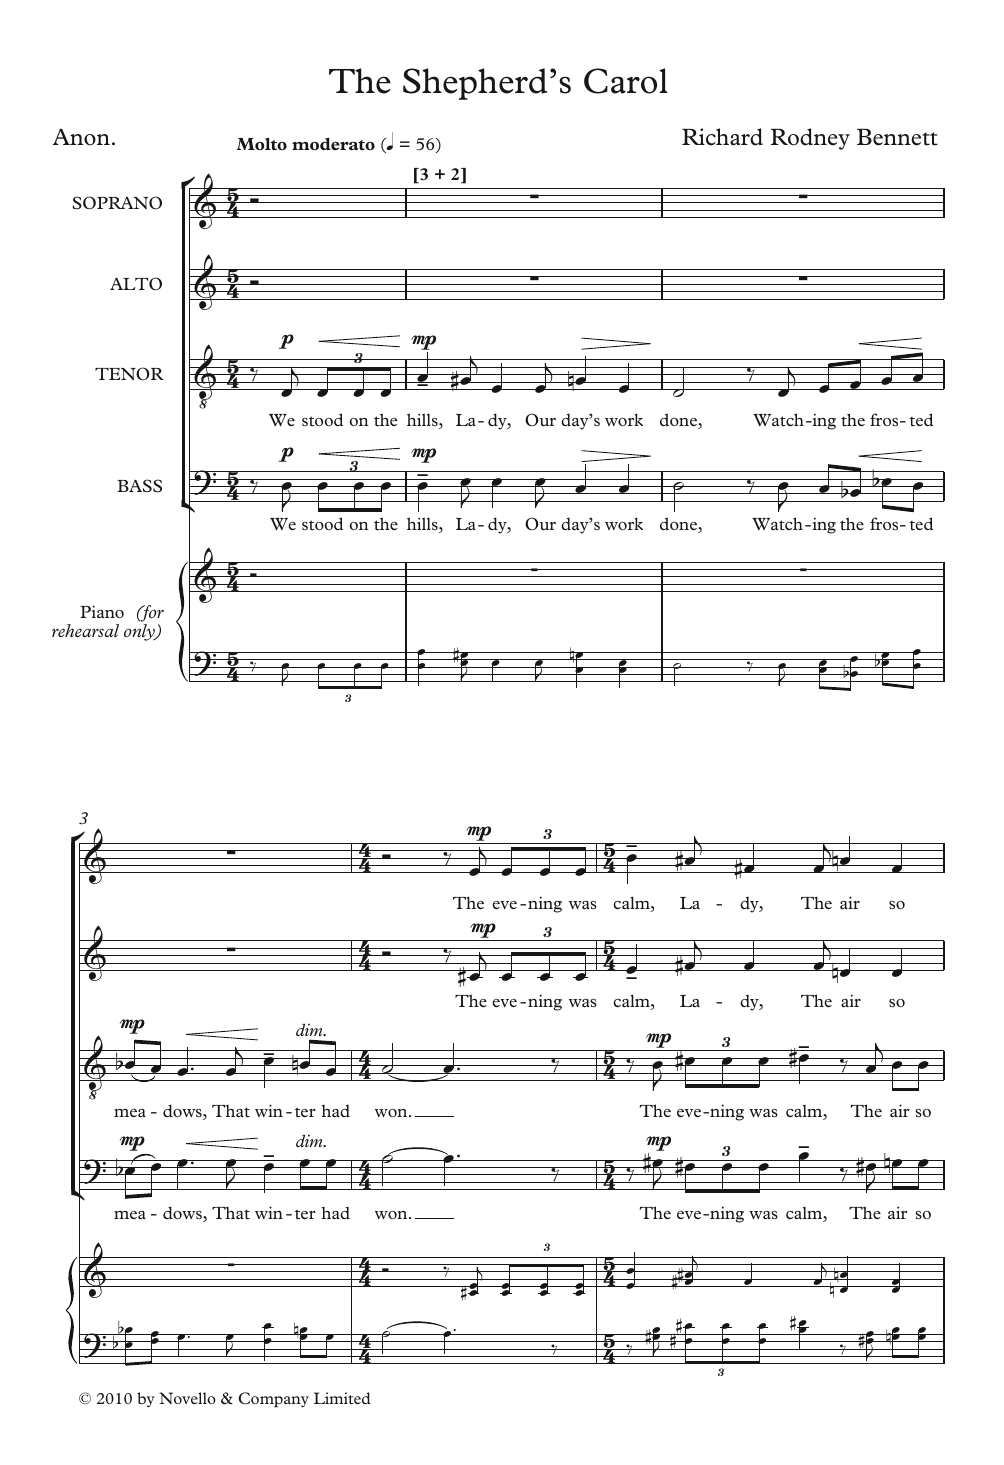 Richard Rodney Bennett The Shepherds Carol Sheet Music Notes Download Printable Pdf Score 0397